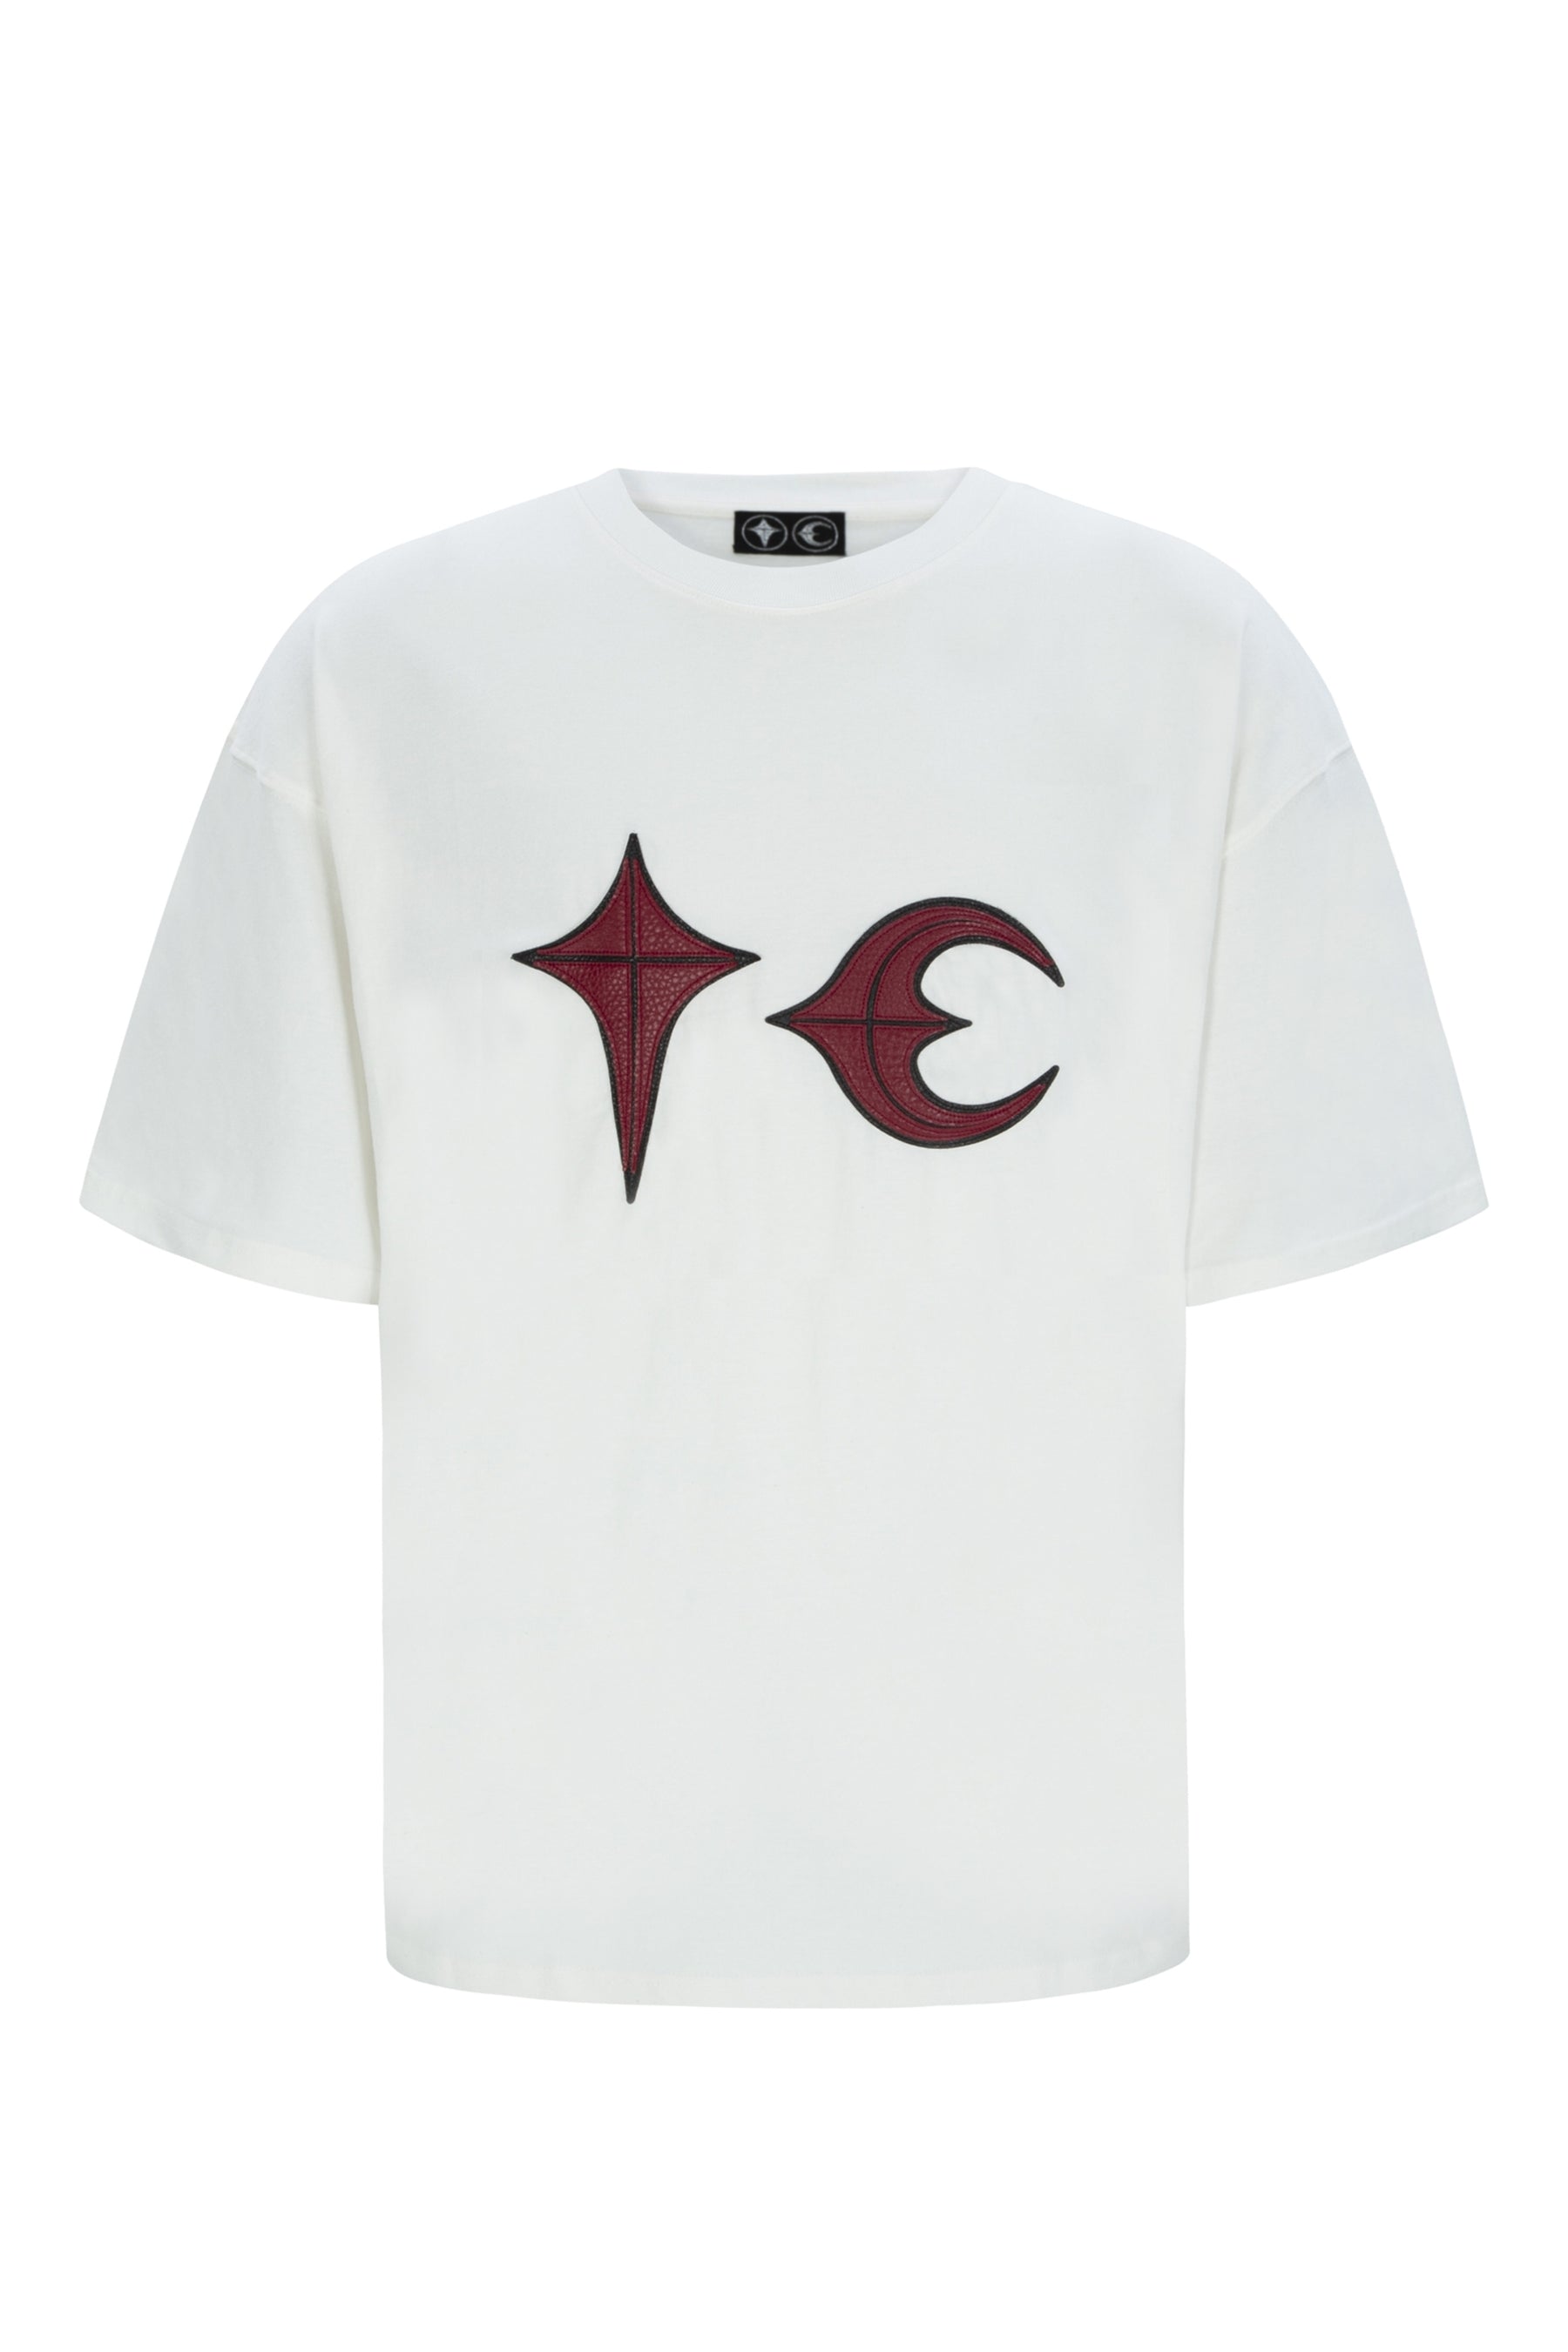 Buy louis-vuitton mens t shirts Online Turkey